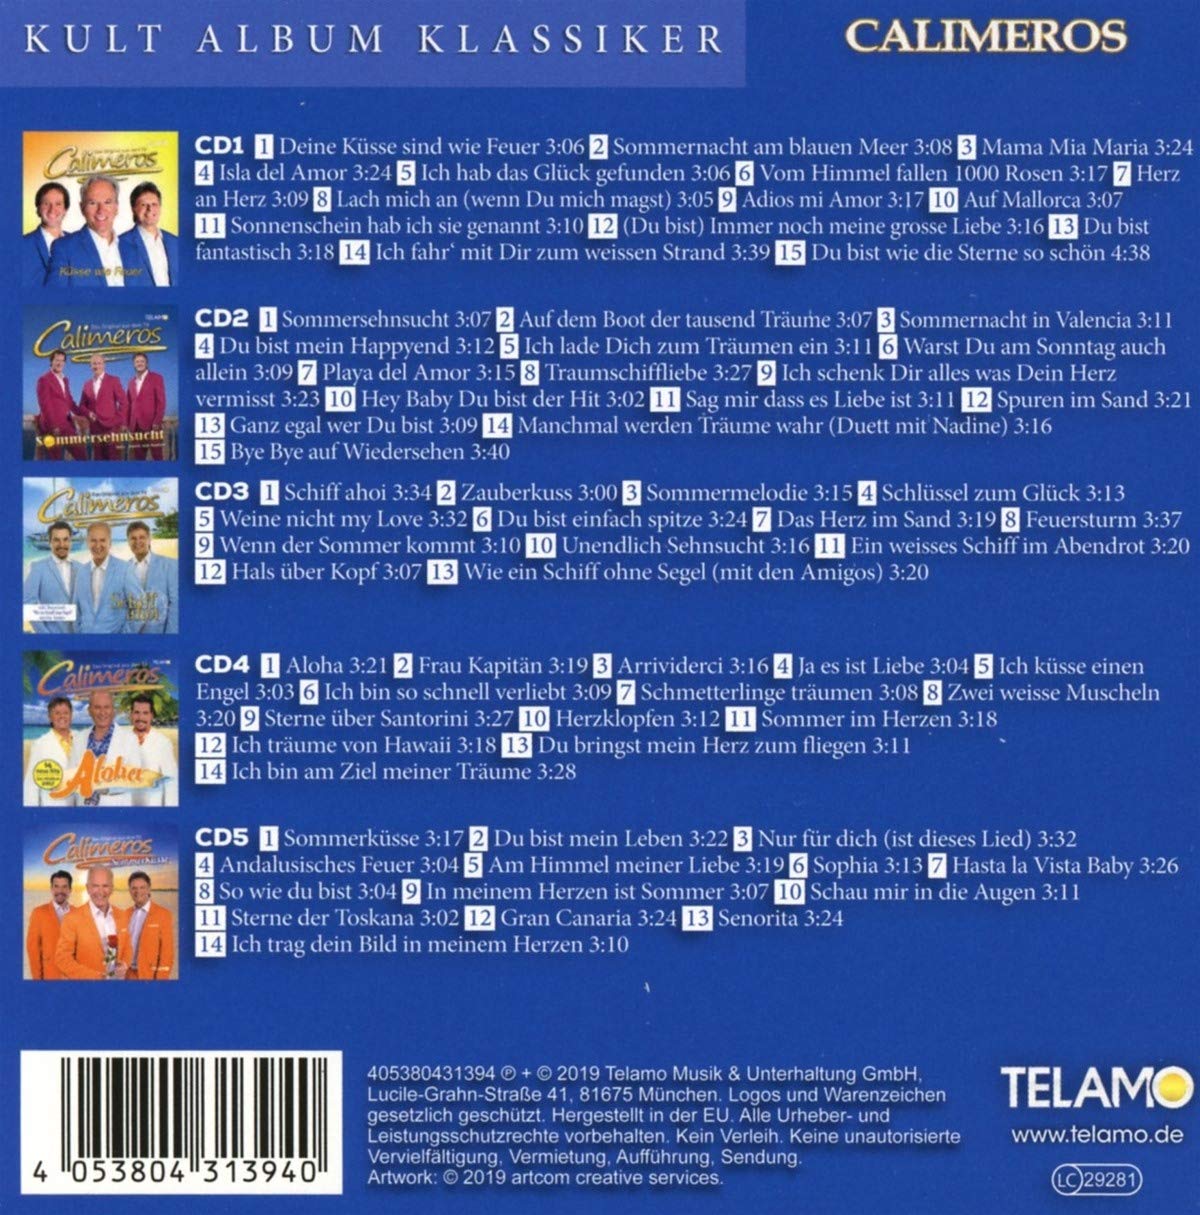 Calimeros - Kult Album Klassiker (2021)